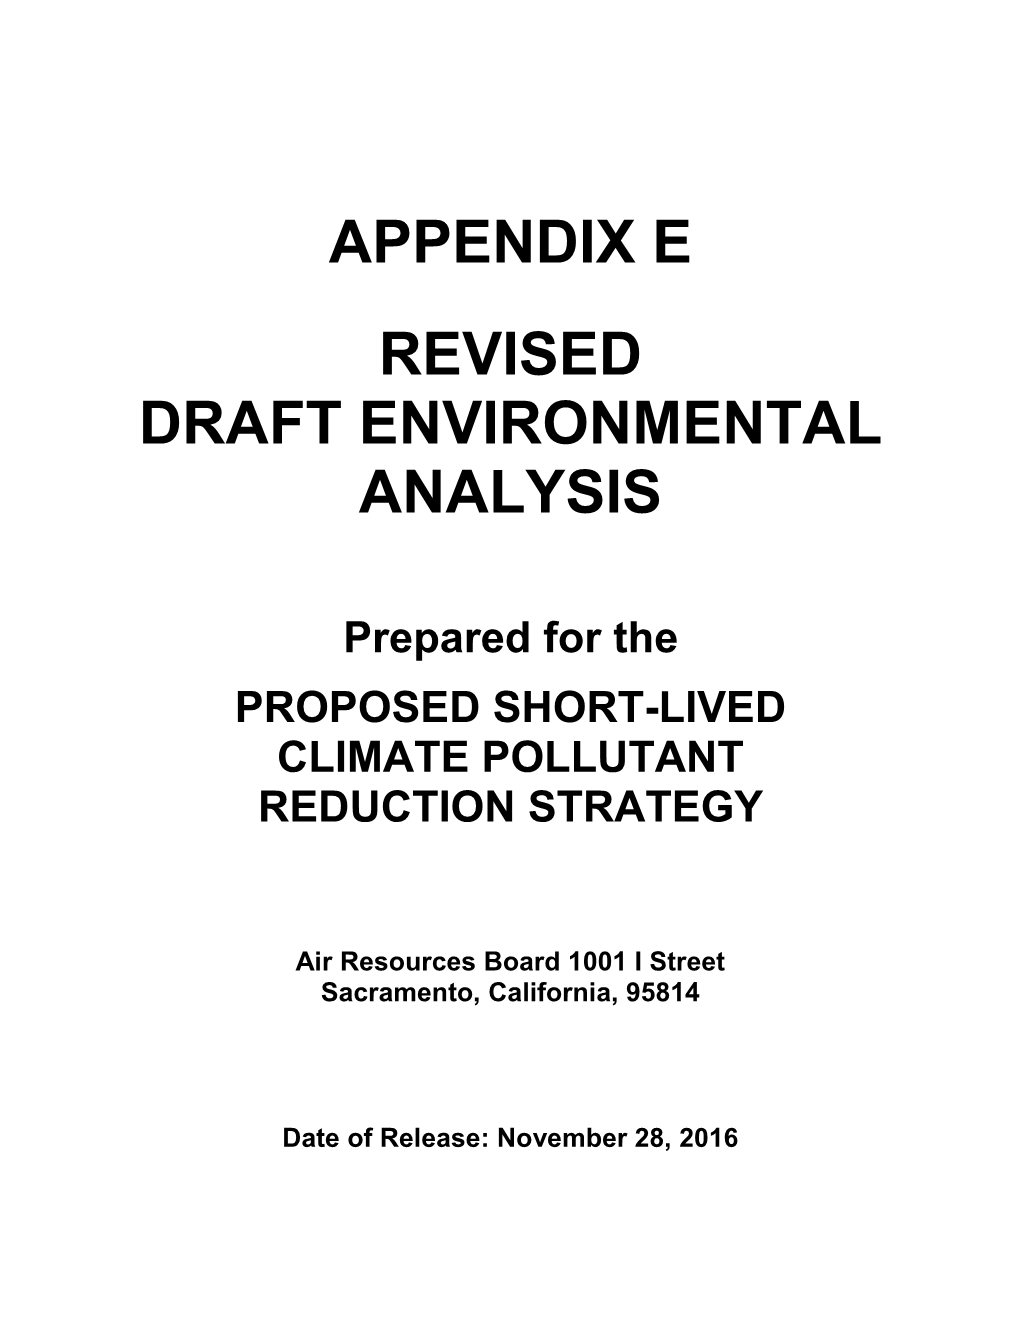 Revised Draft Environmental Analysis